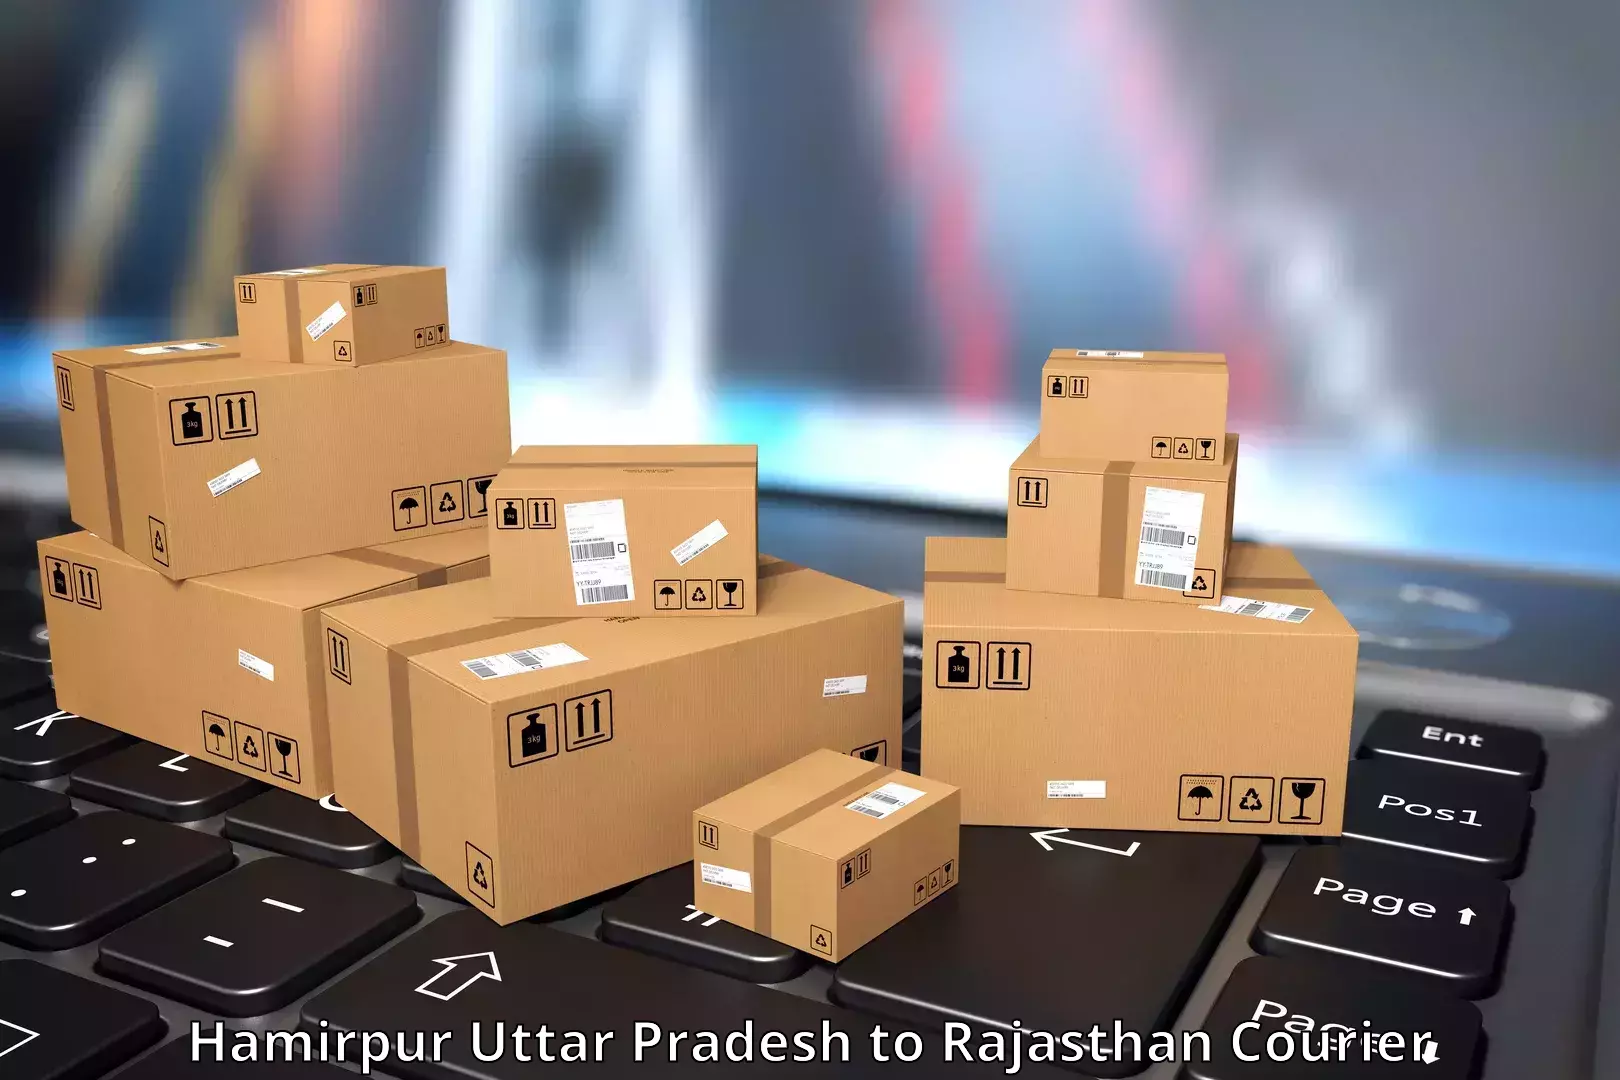 Courier service innovation Hamirpur Uttar Pradesh to Neemrana